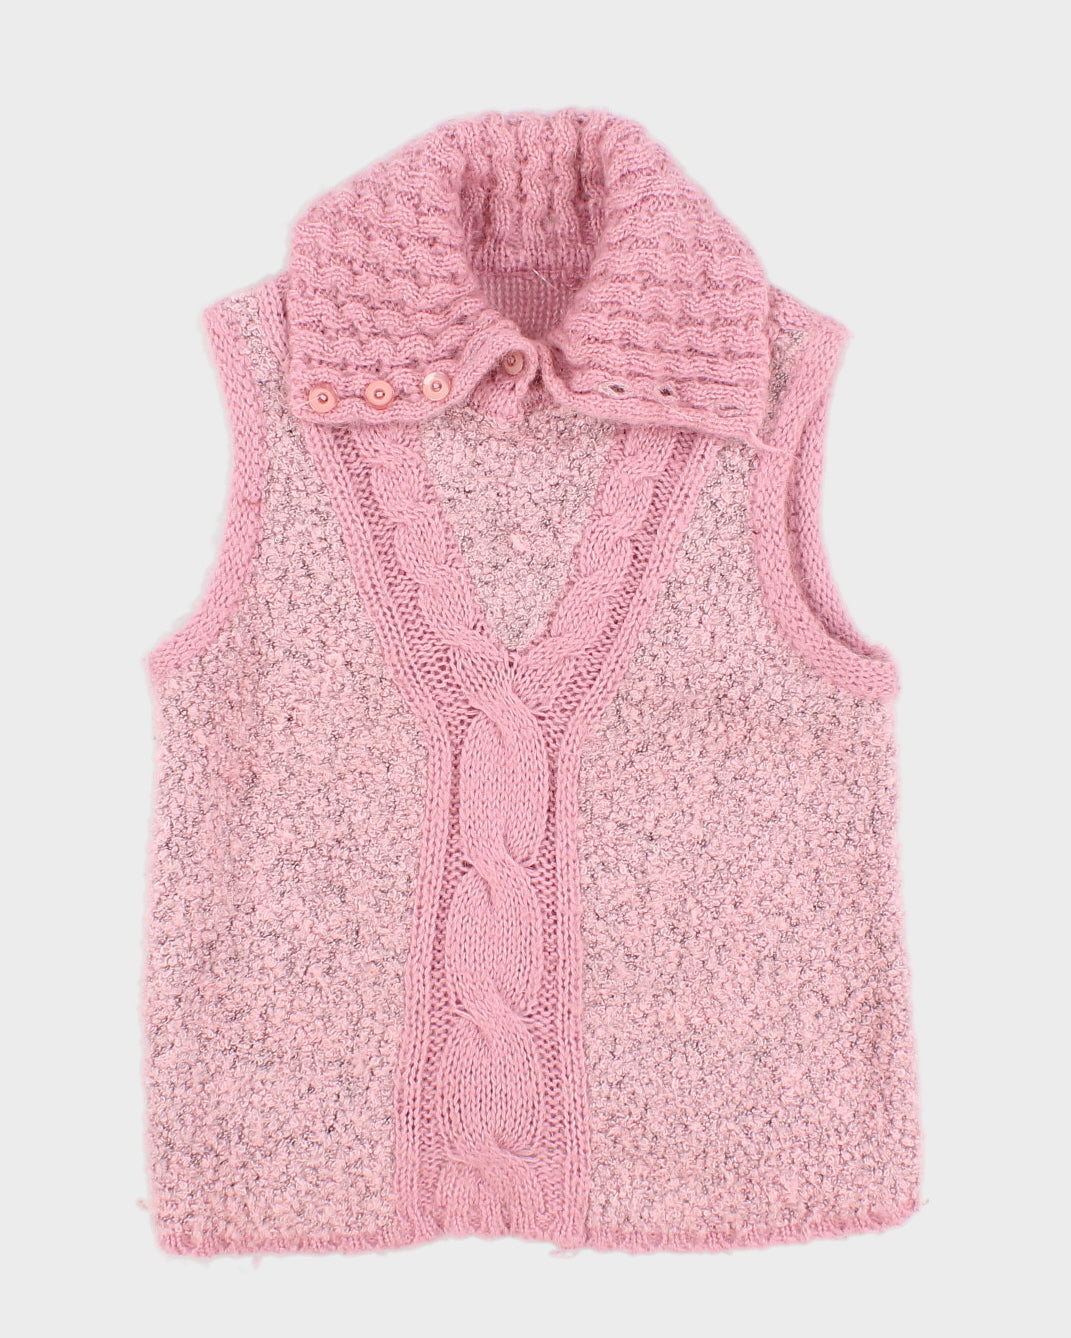 Womens Pink Chunky Knit Vest - S